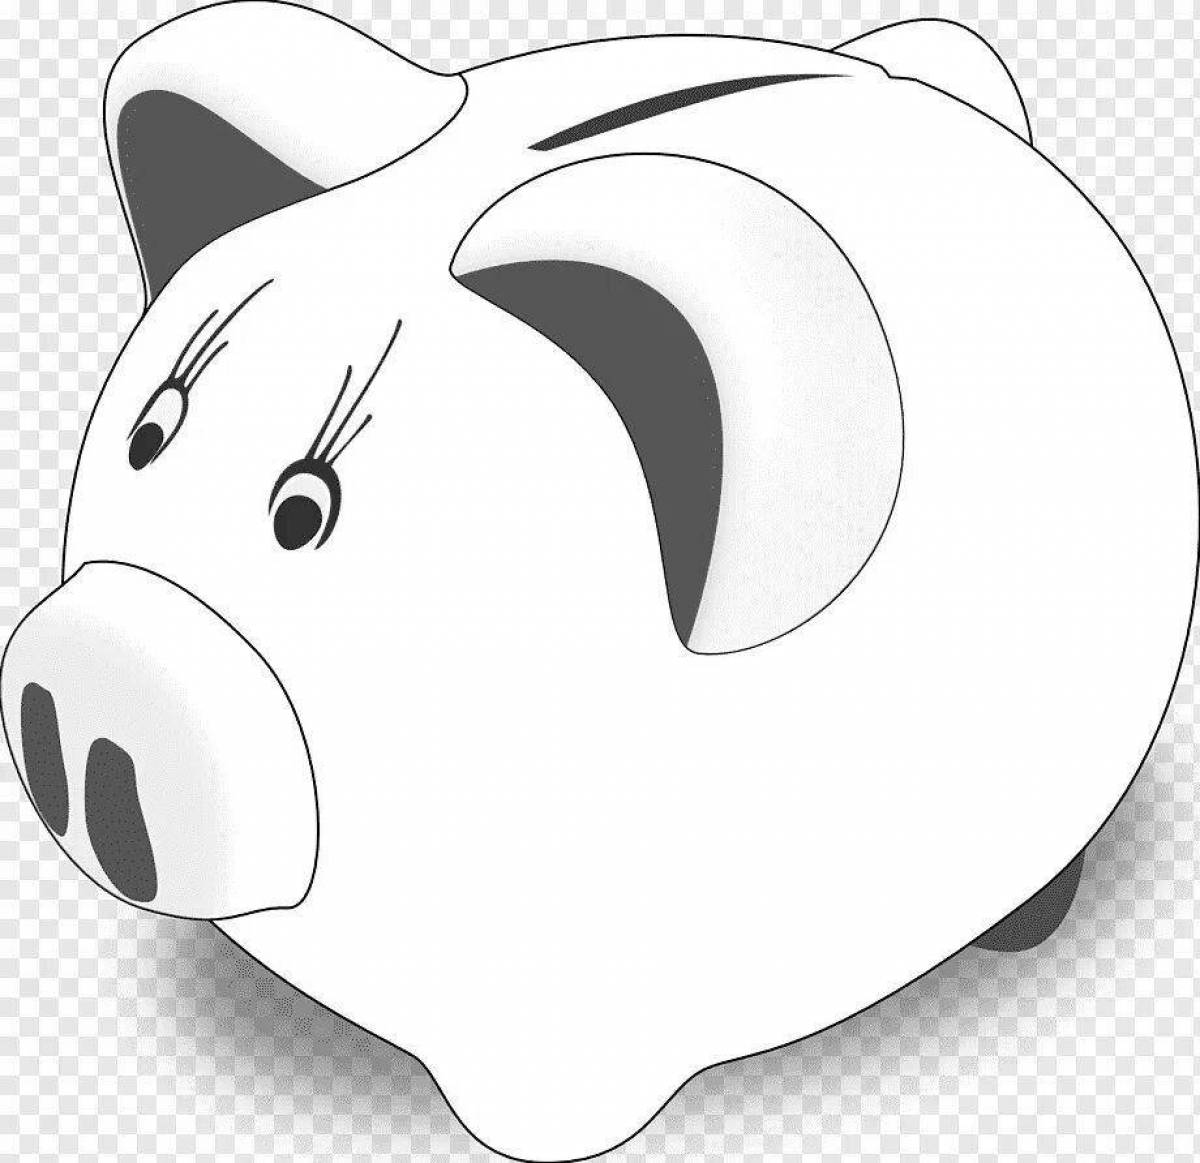 Adorable piggy bank coloring book for kids